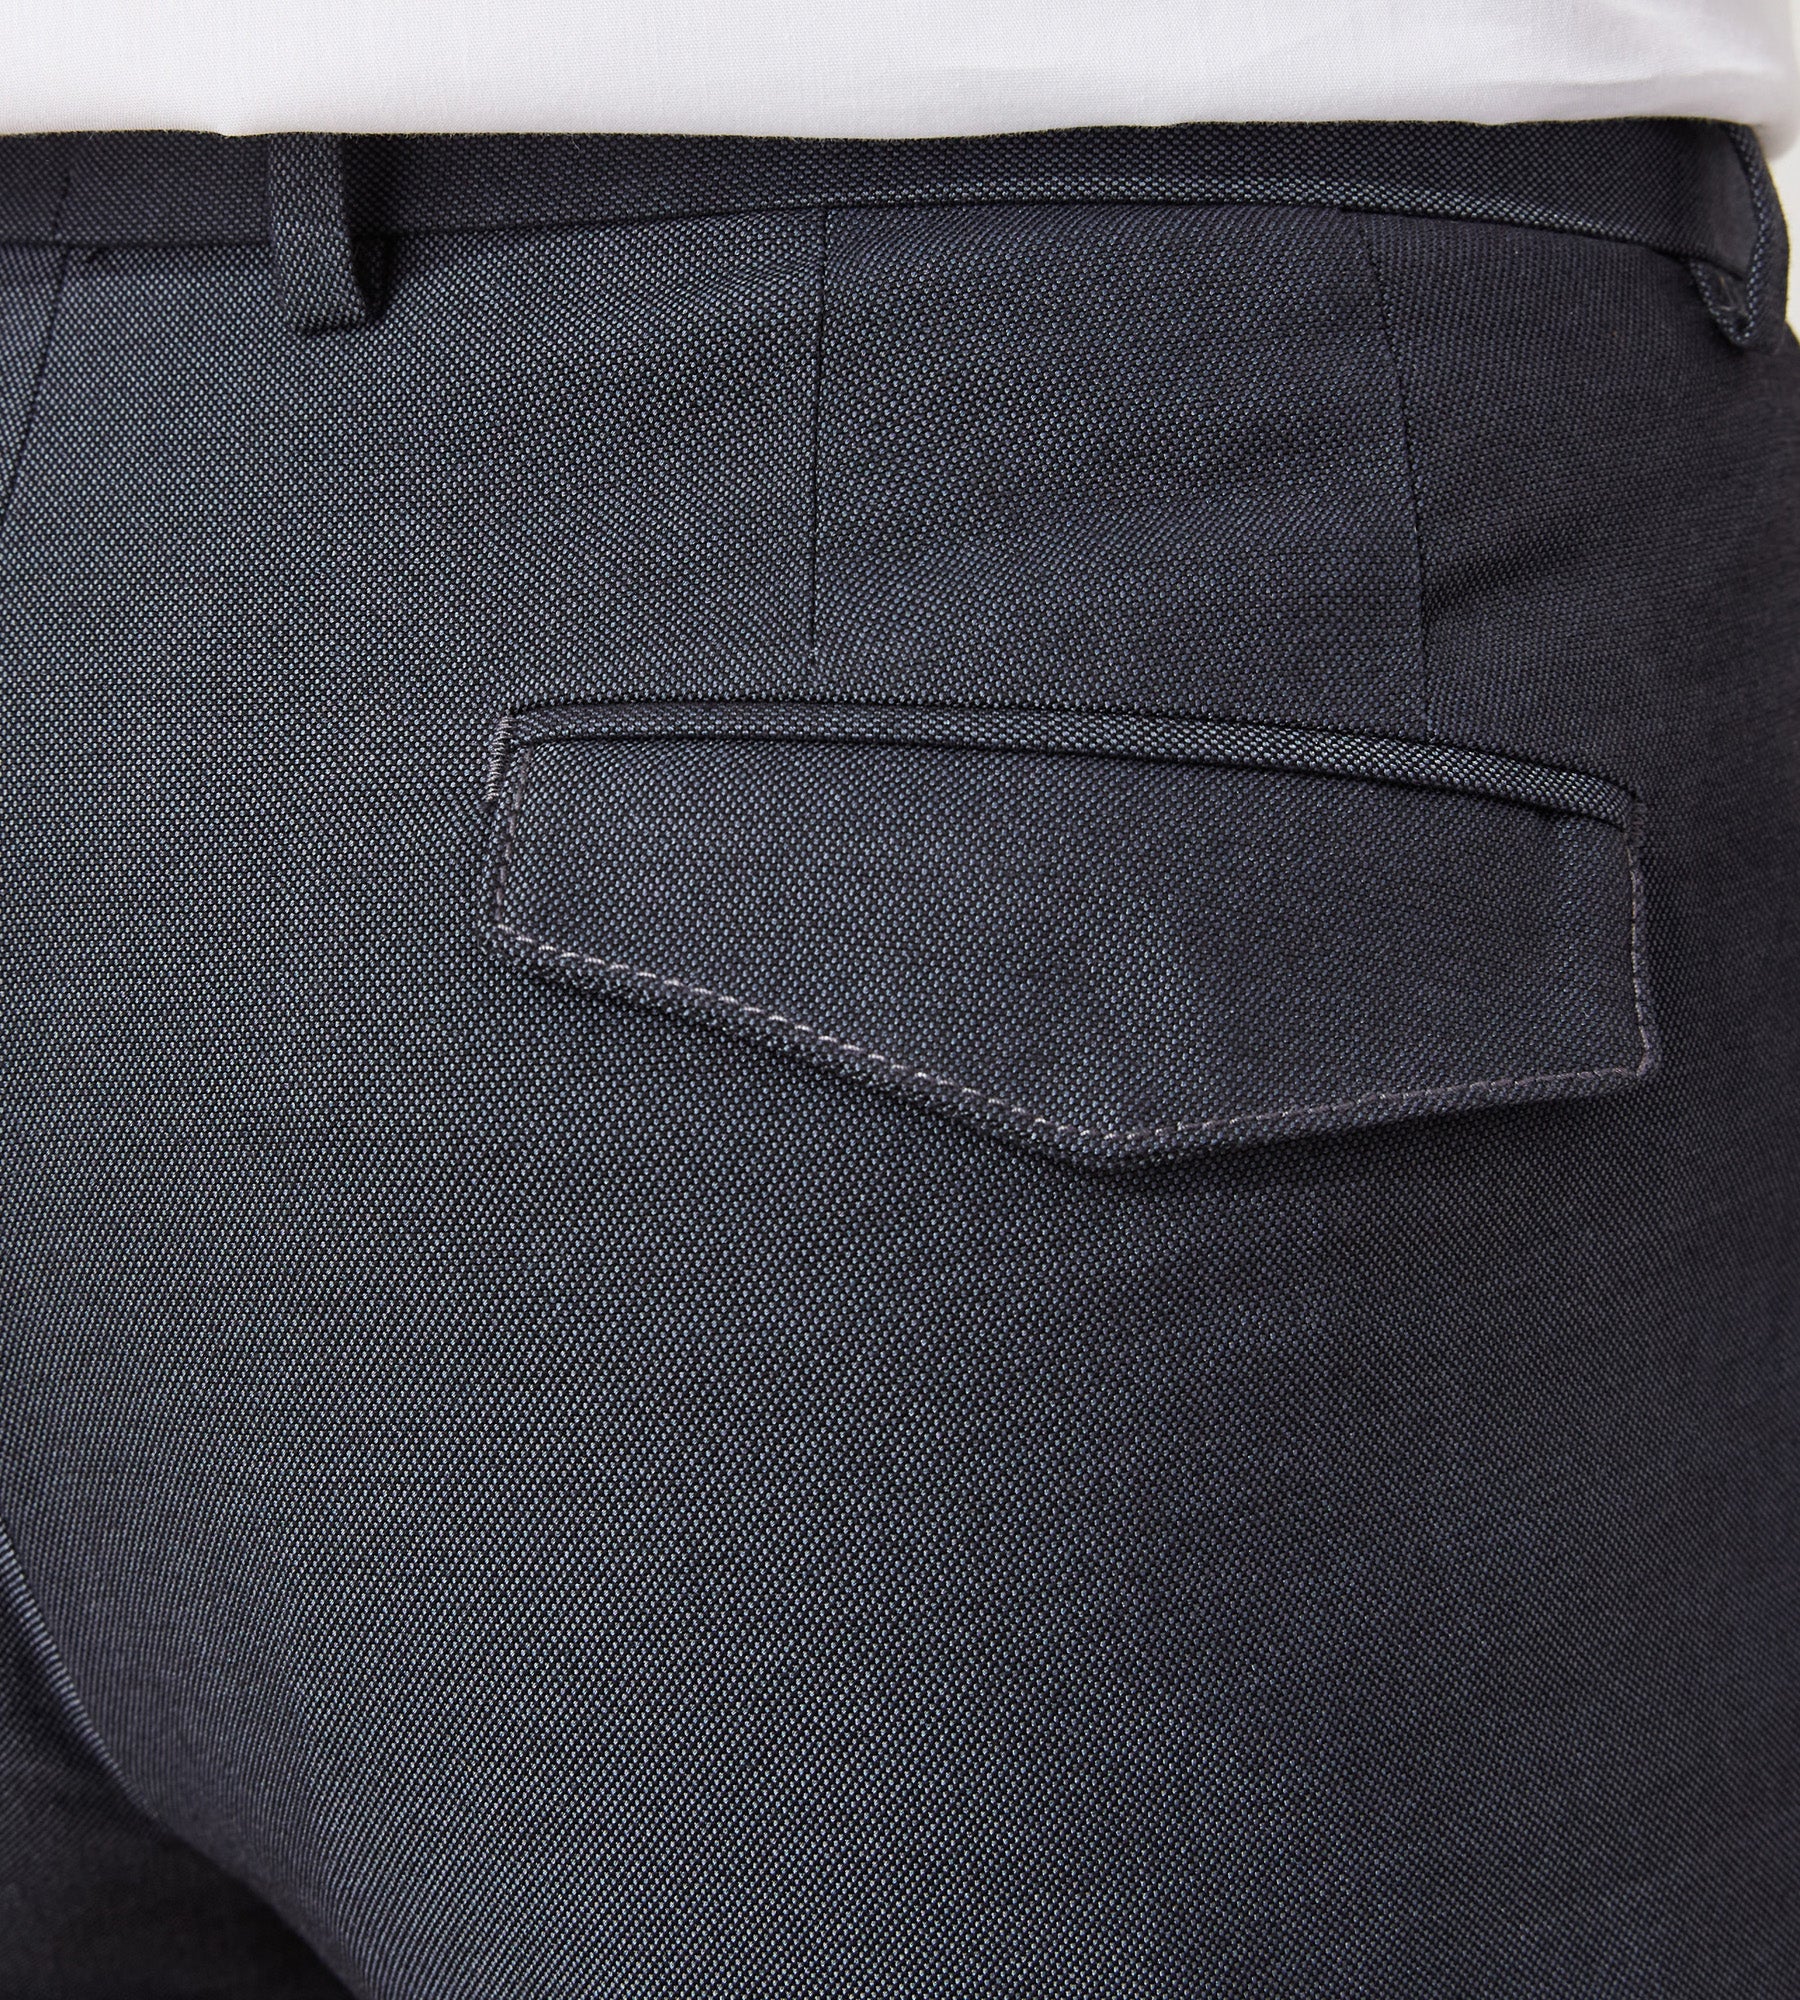 Tek Gear Solid Black Dress Pants Size XL - 50% off